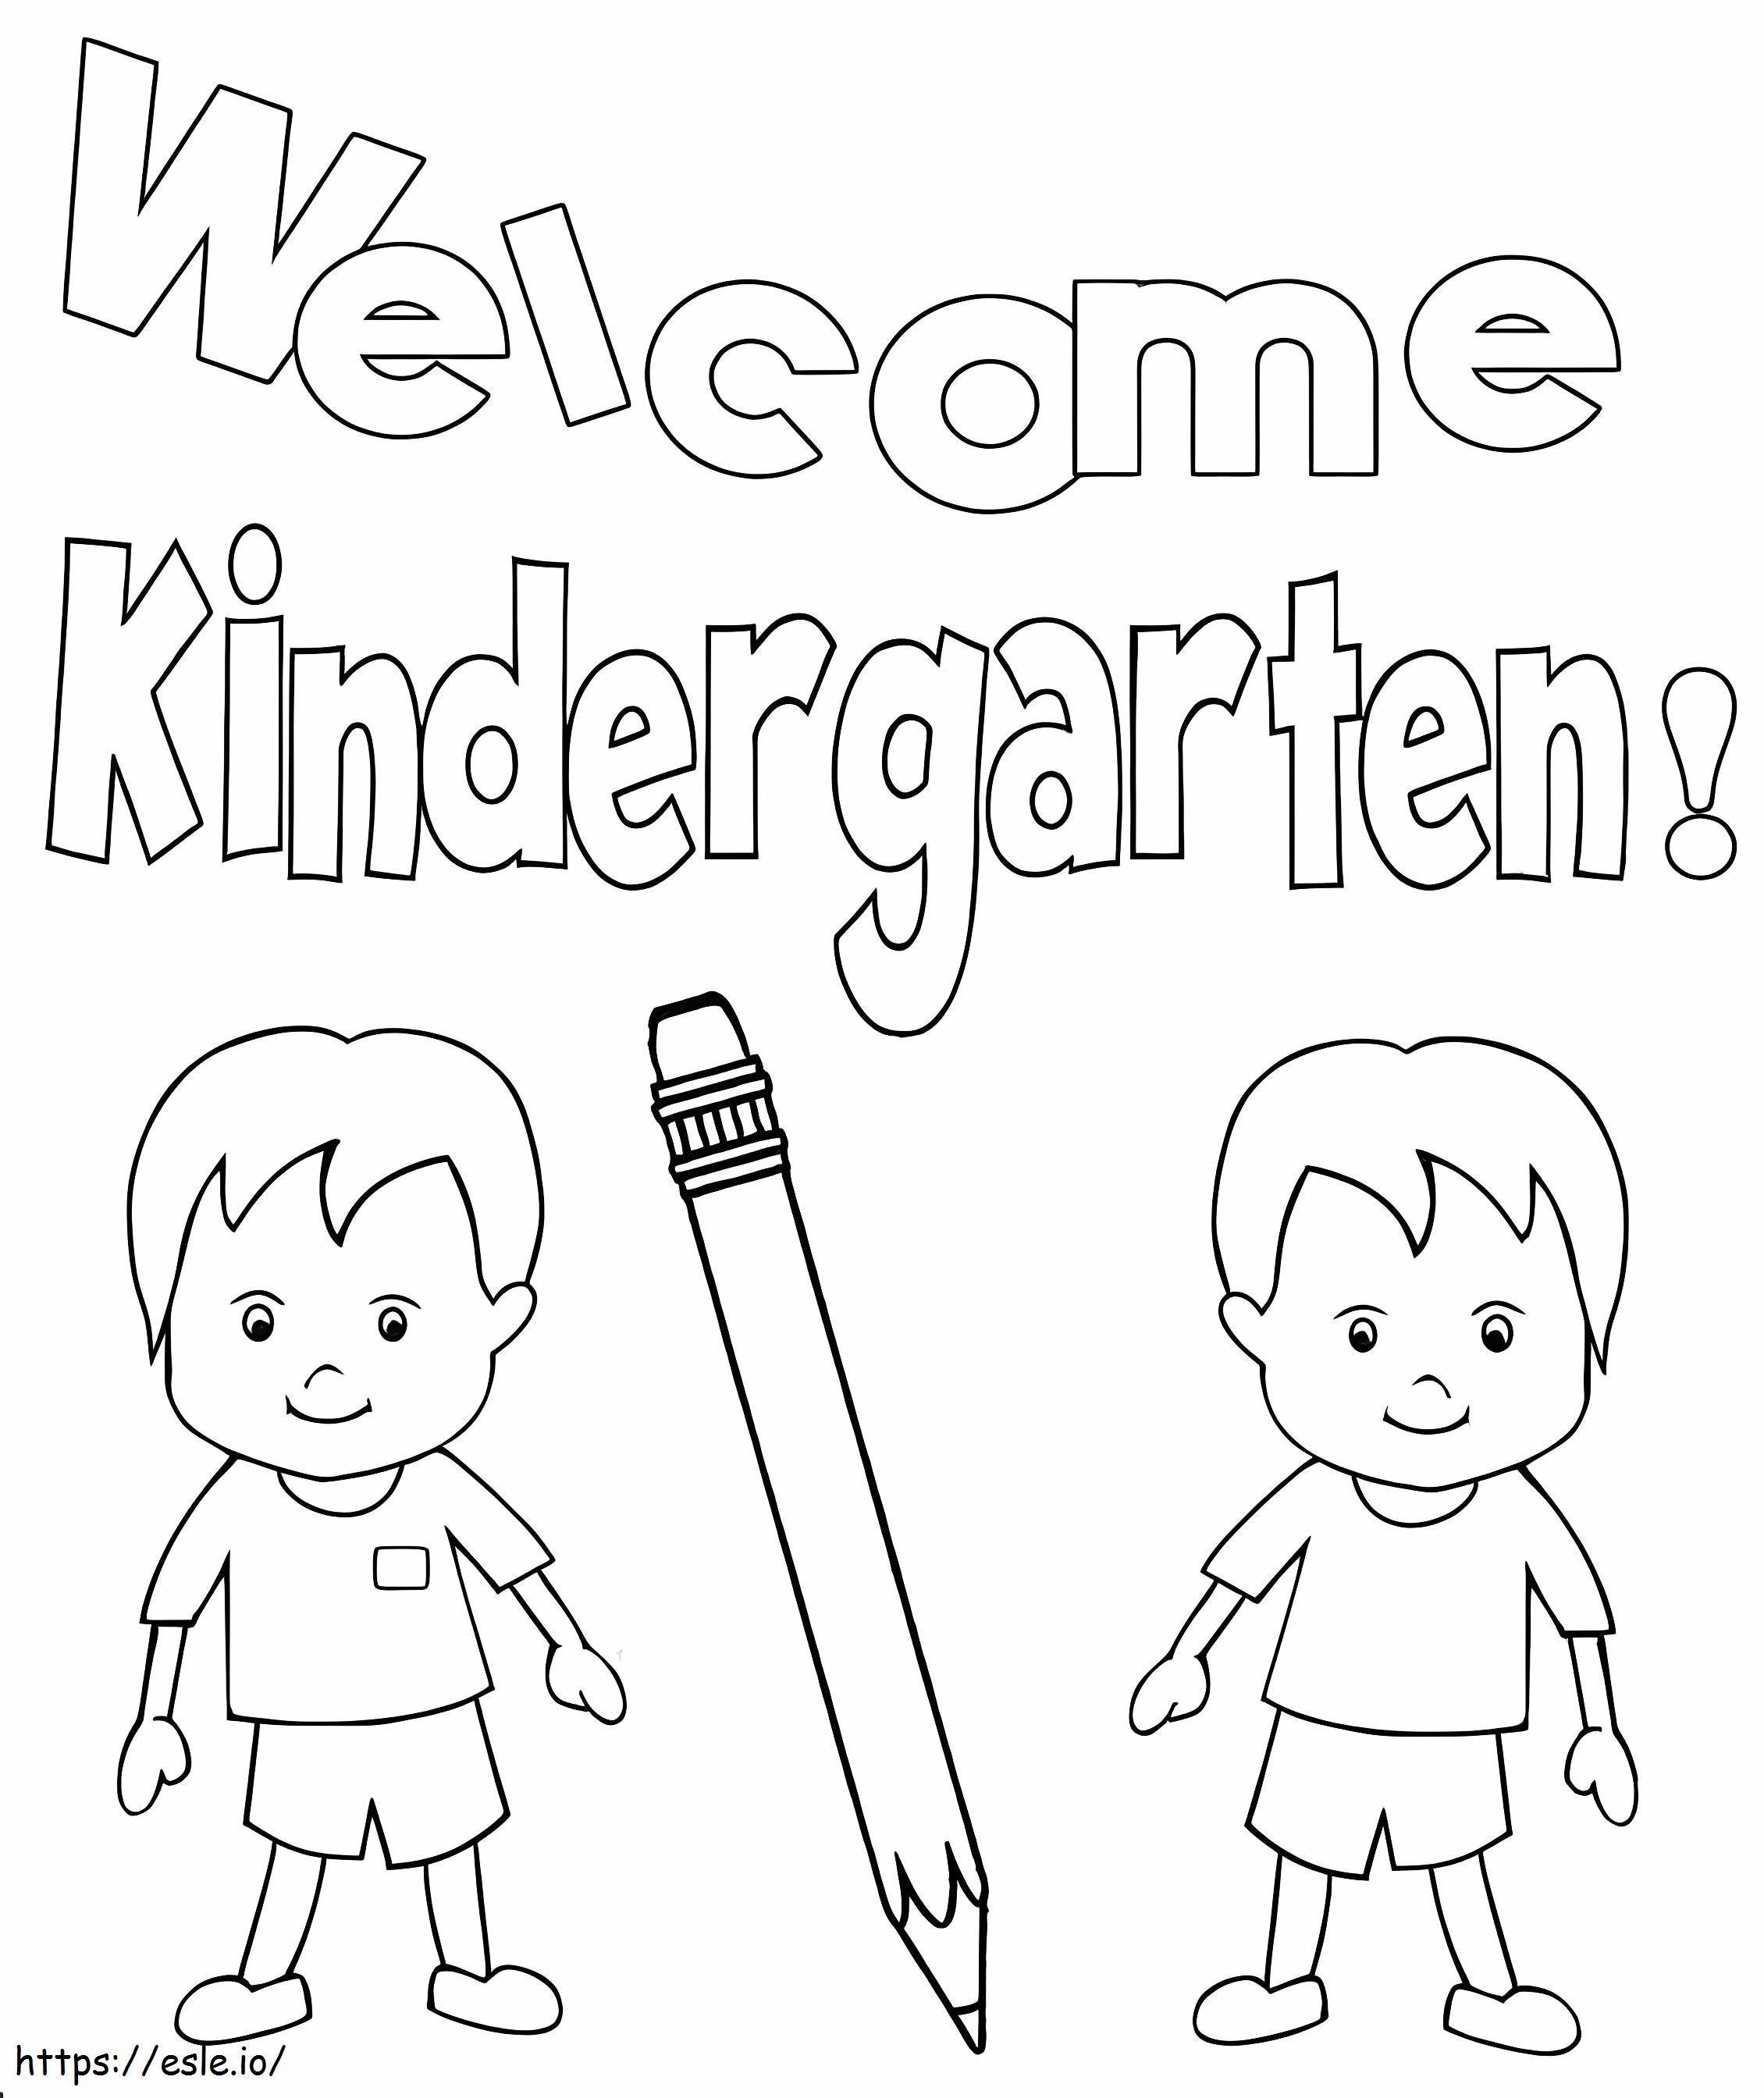 Kindergarten 2 ausmalbilder